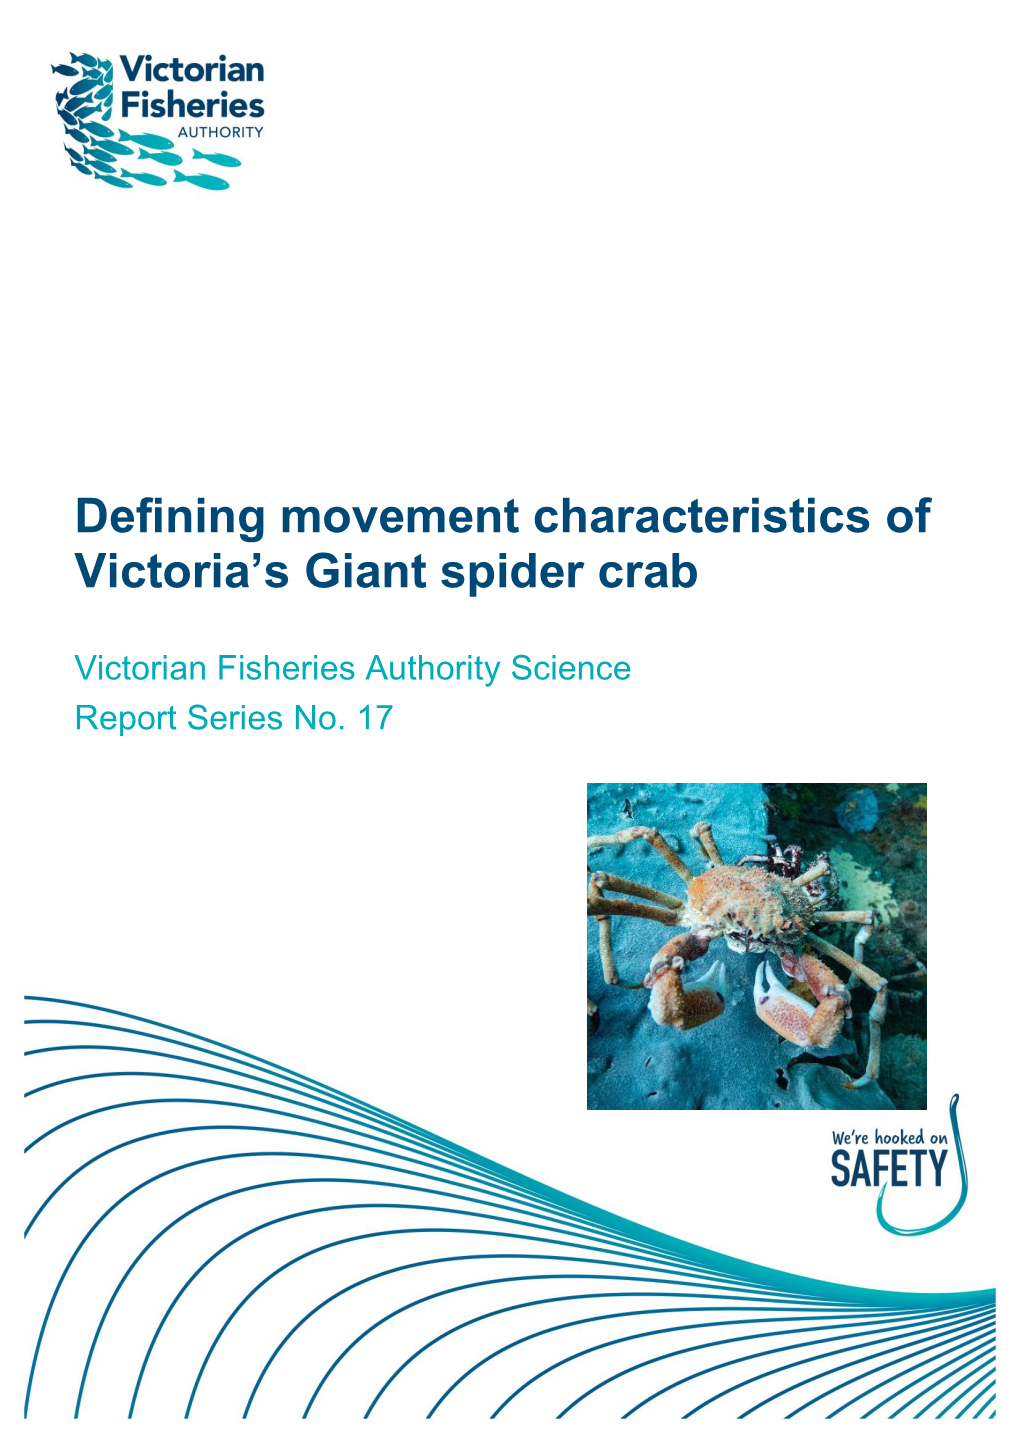 Defining Movement Characteristics of Victoria's Giant Spider Crab